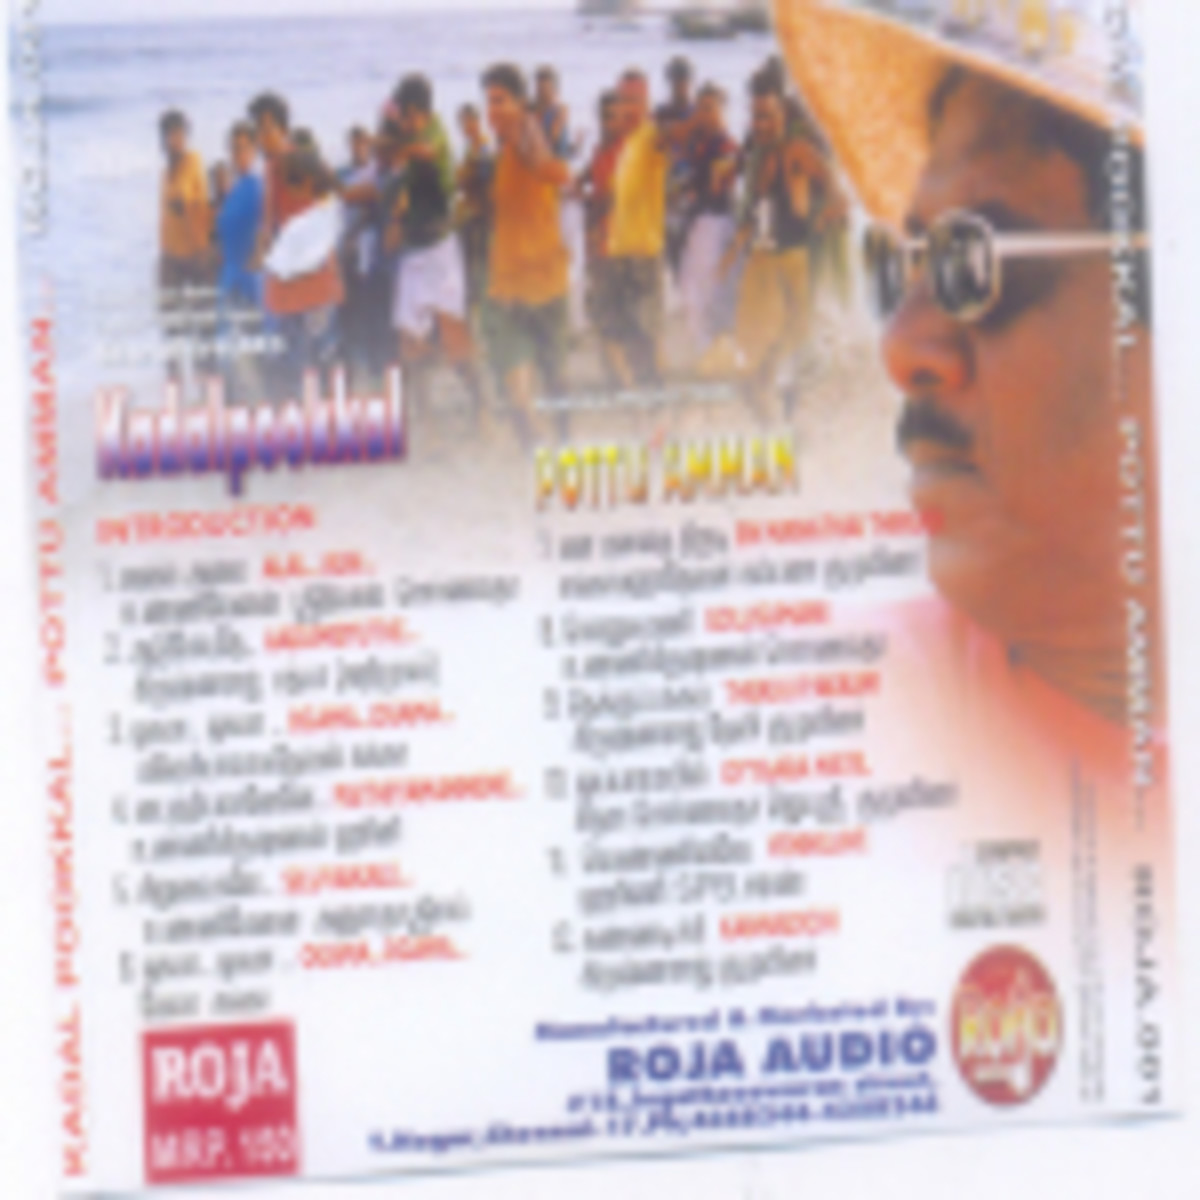 tamil amman songs mp3 free download starmusiq